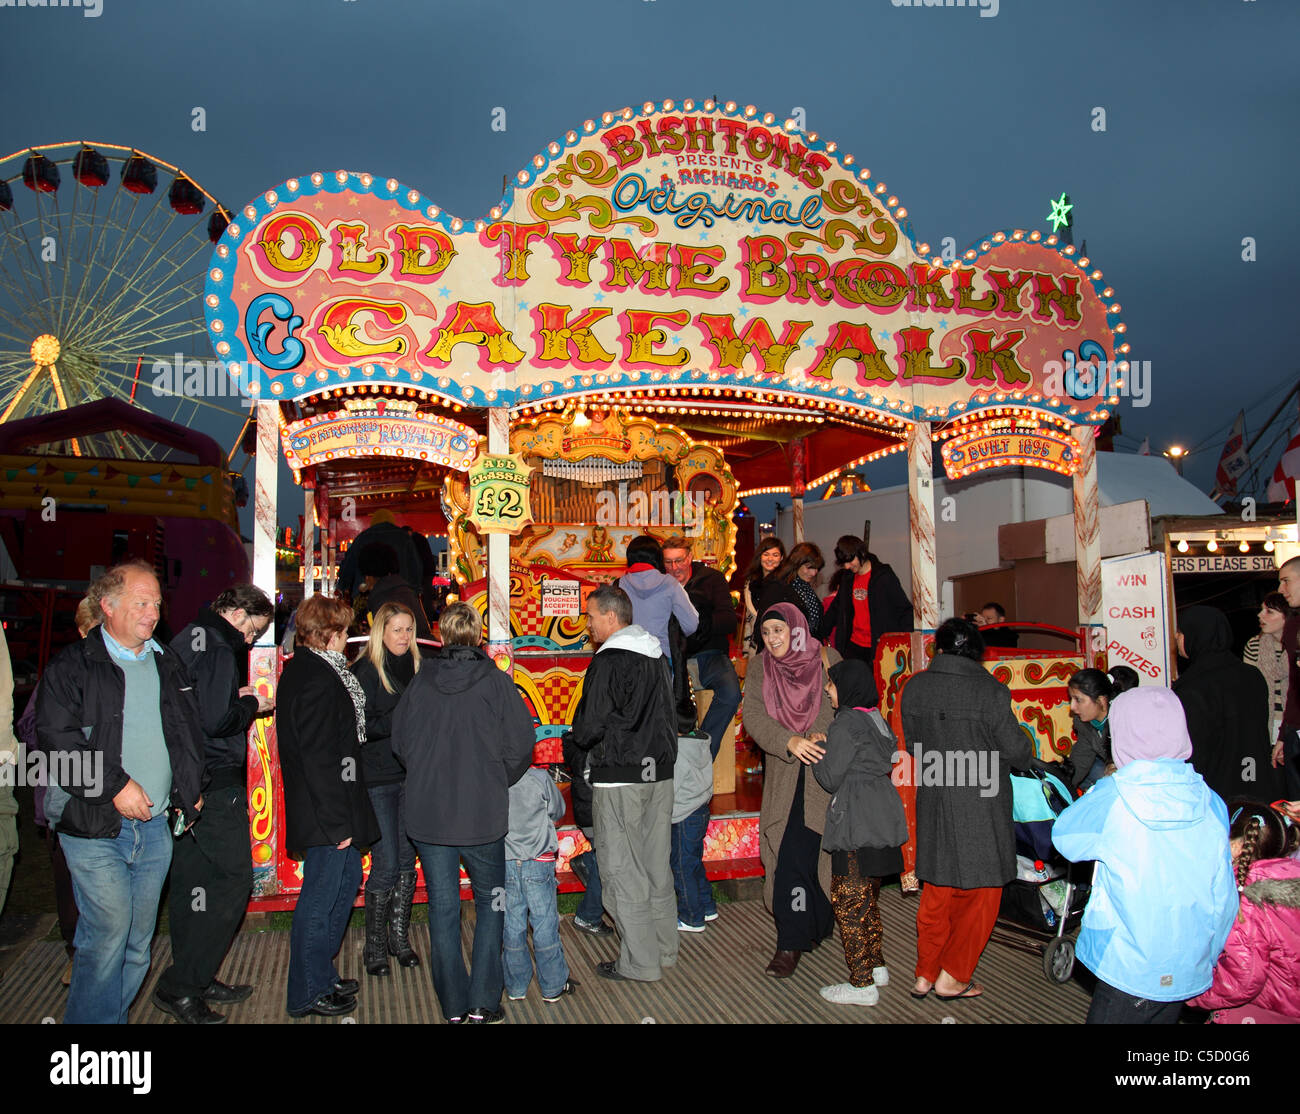 Bishtons Old Tyme Brooklyn Cakewalk presso la fiera d'oca, Nottingham, Inghilterra, Regno Unito Foto Stock